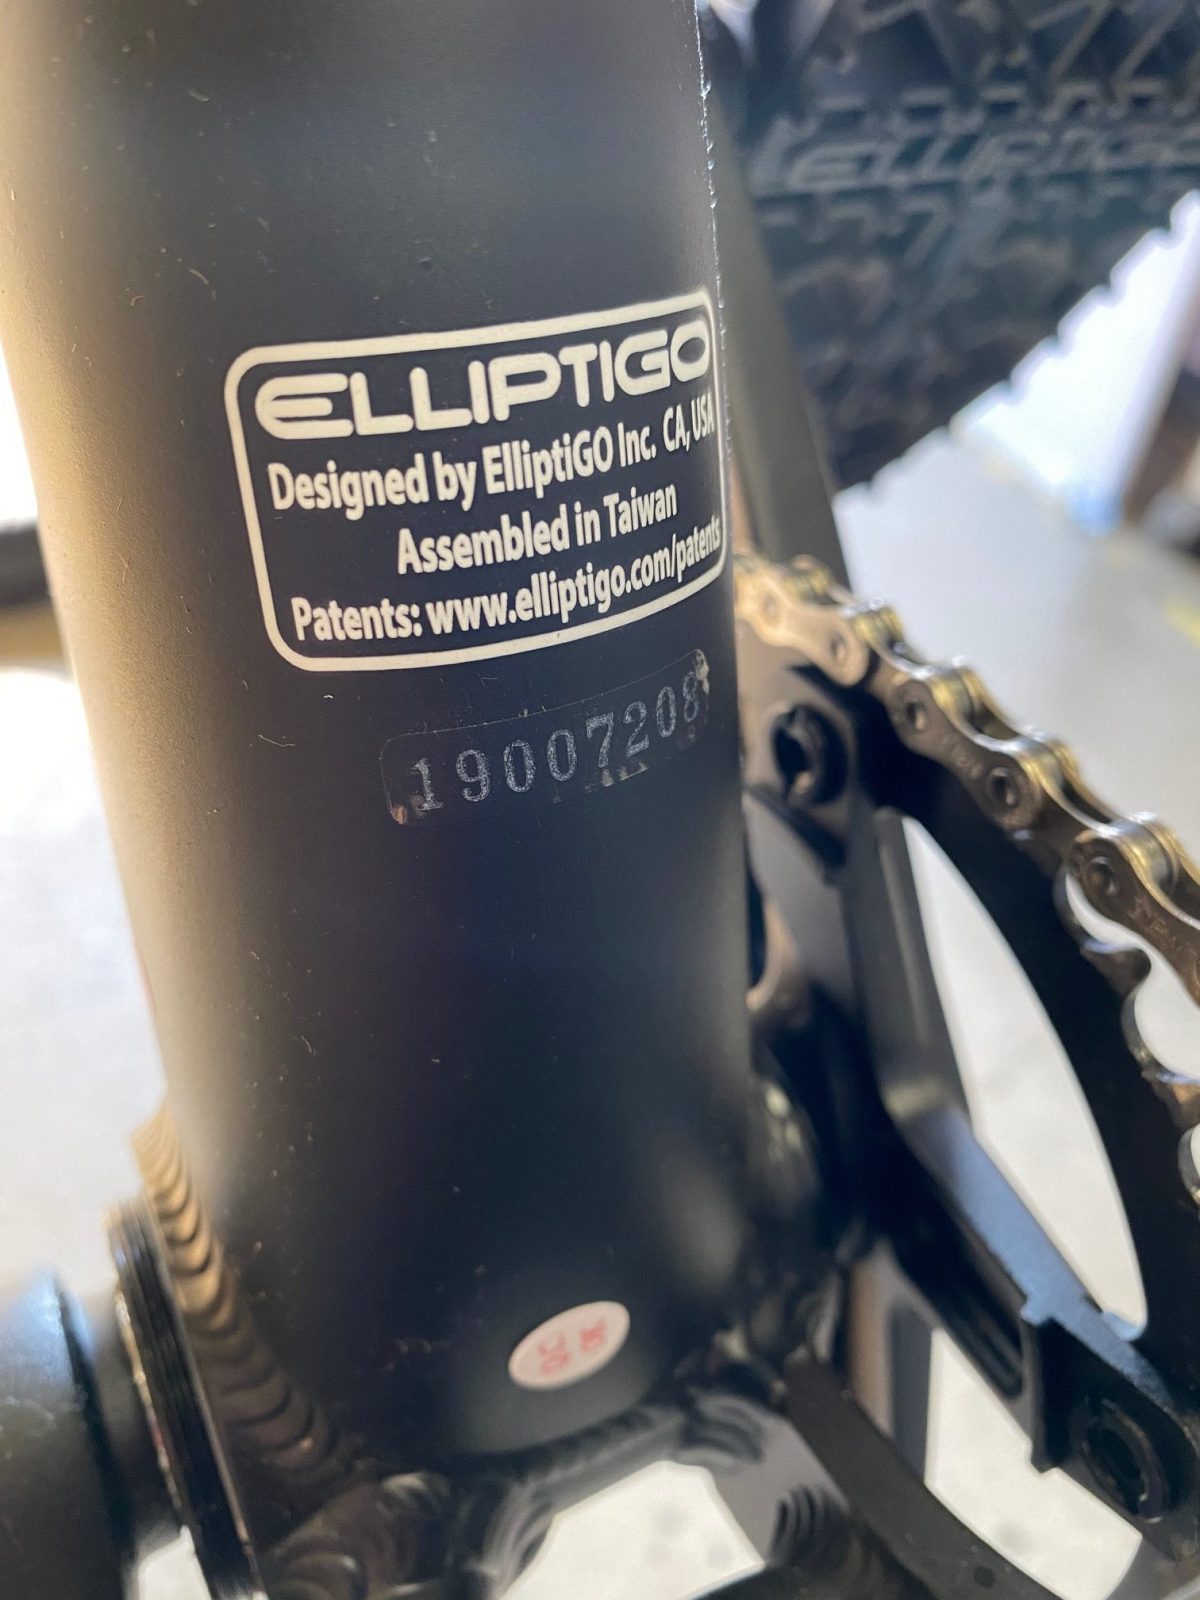 ElliptiGO serial number on bike